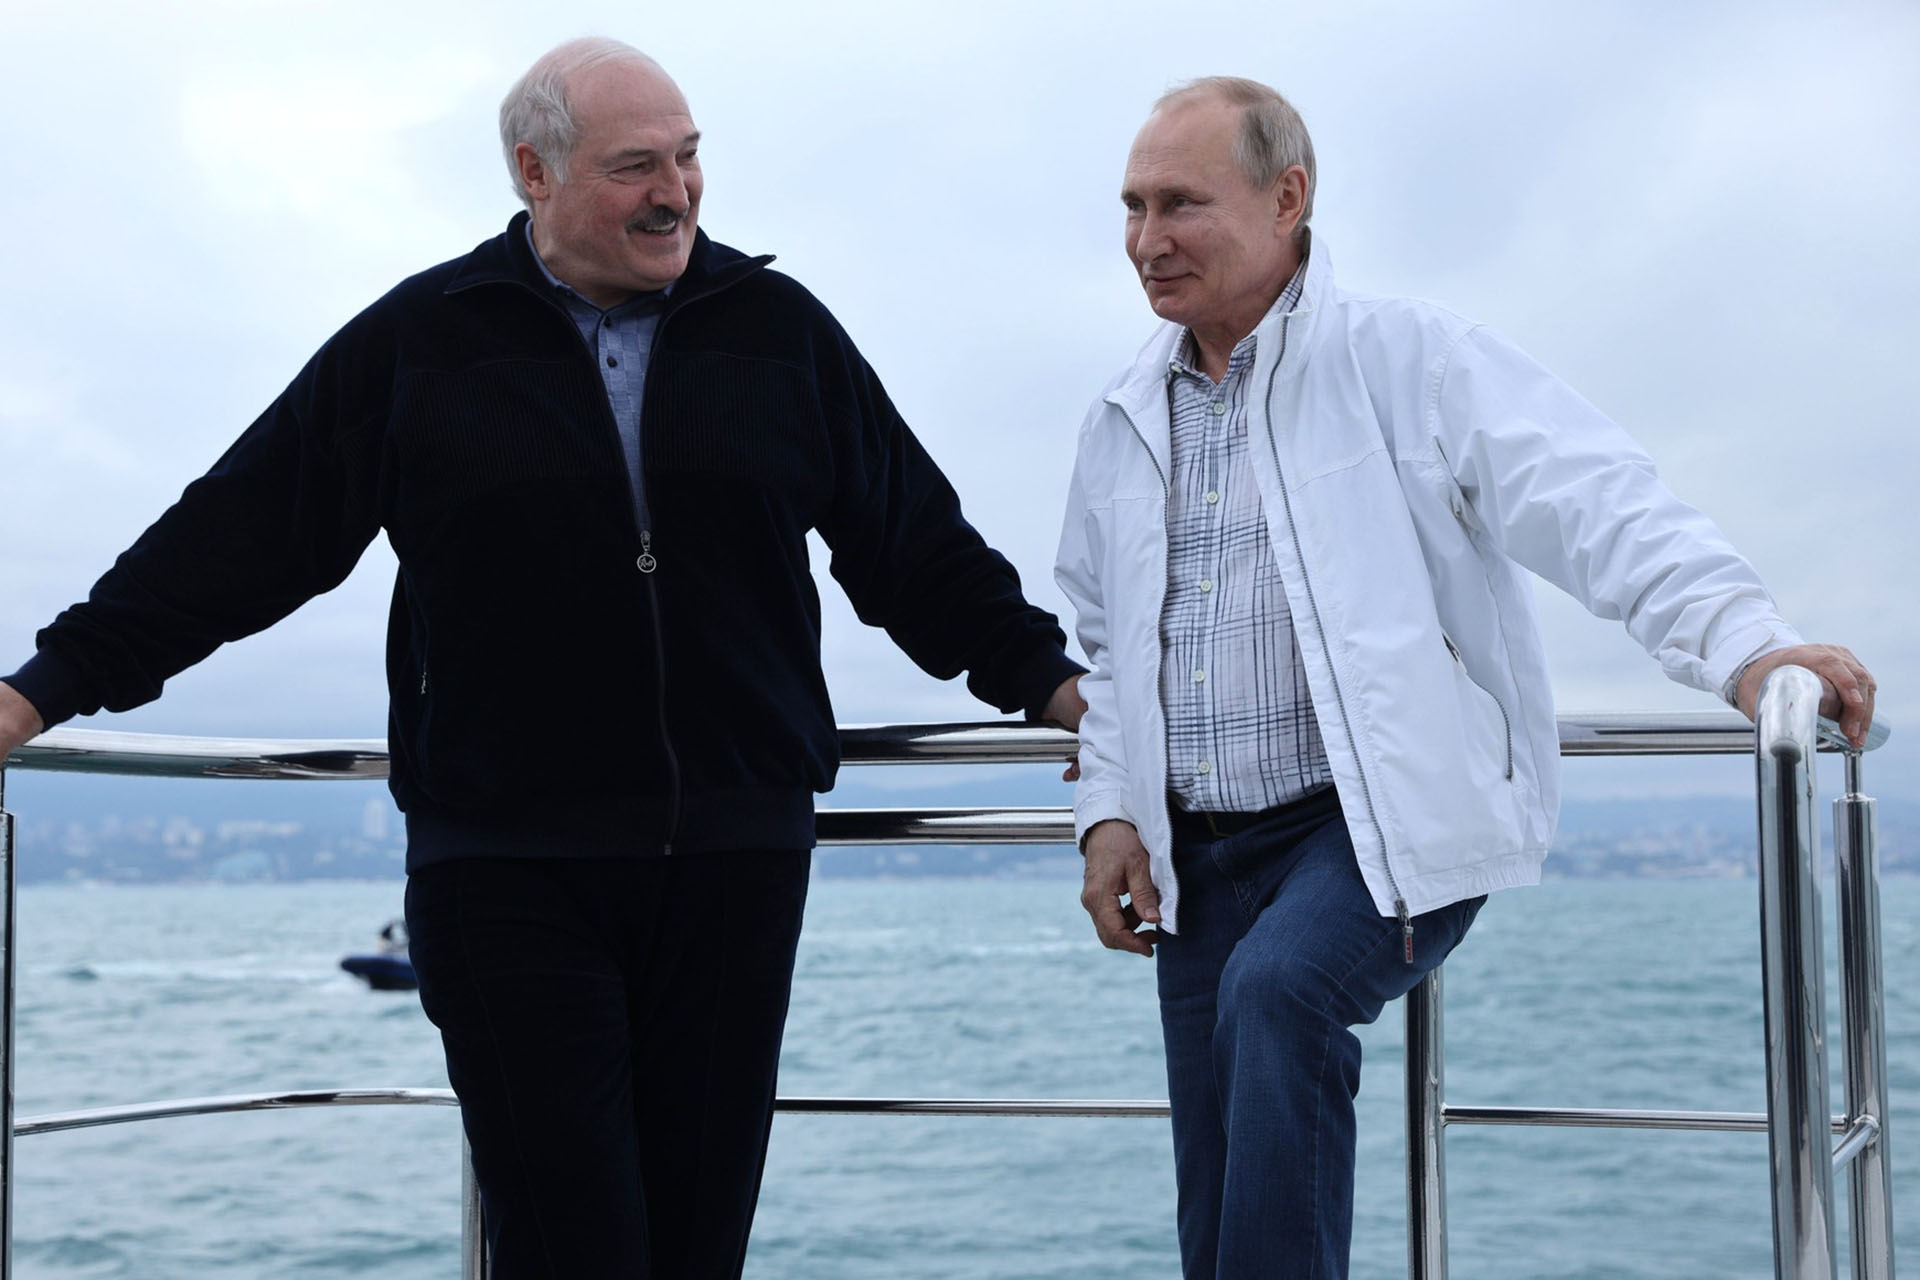 Bild: Kremlin.ru, Meeting of Vladimir Putin and Alexander Lukashenko 07 (29-05-2021), CC BY 4.0, via Wikimedia Commons (Bildgröße geändert)